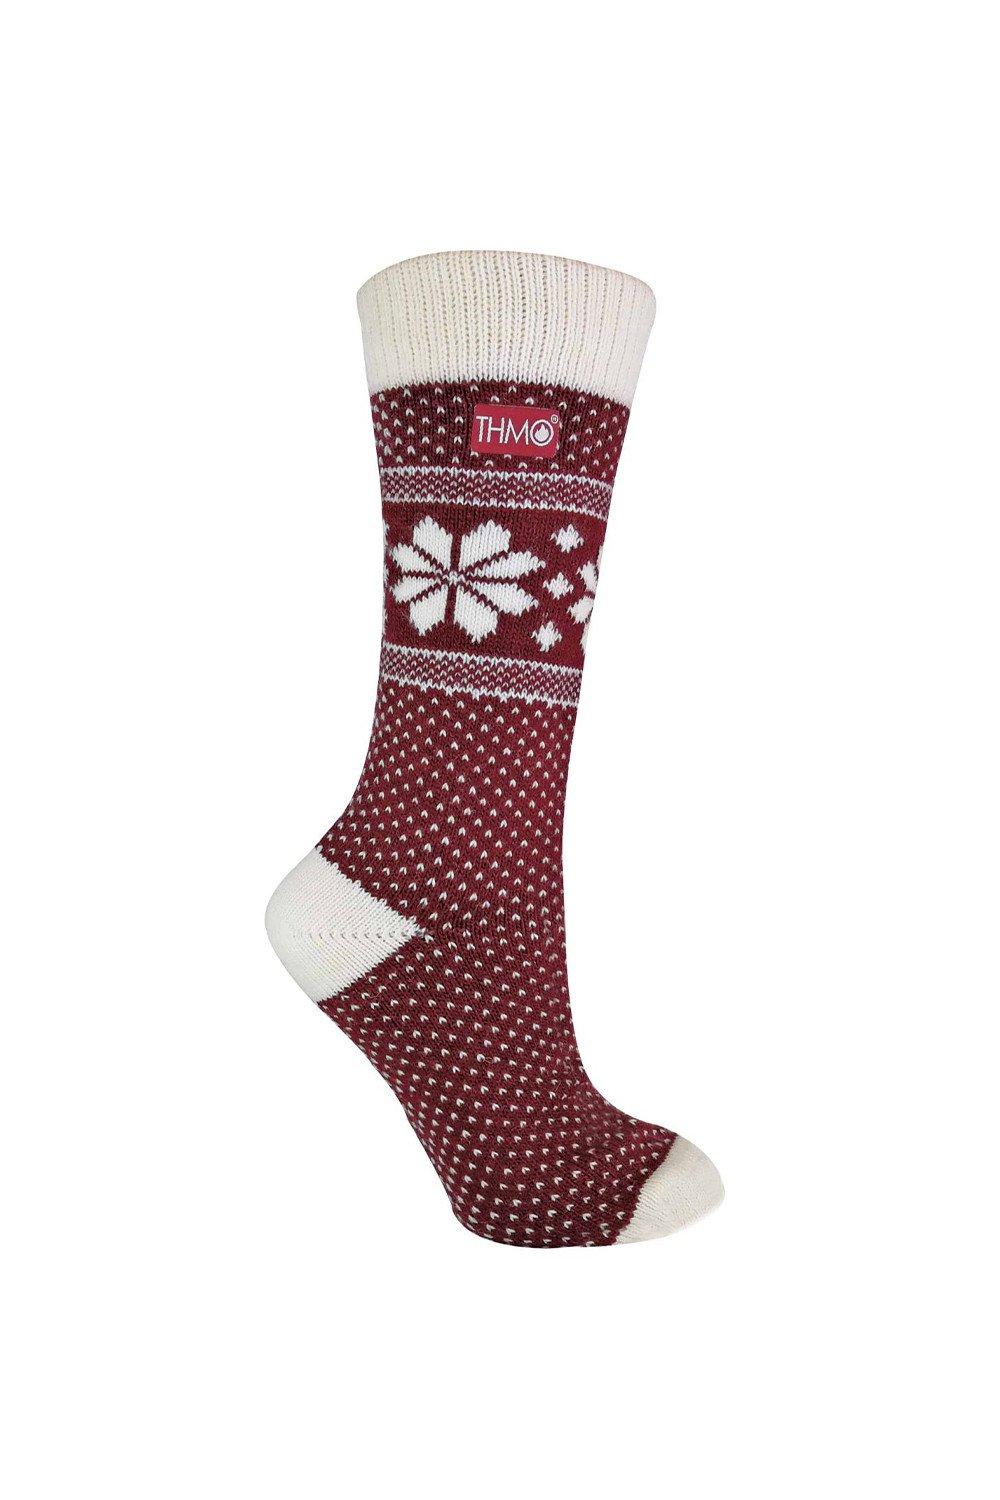 Vintage Nordic Fairisle Style Winter Wool Blend Socks